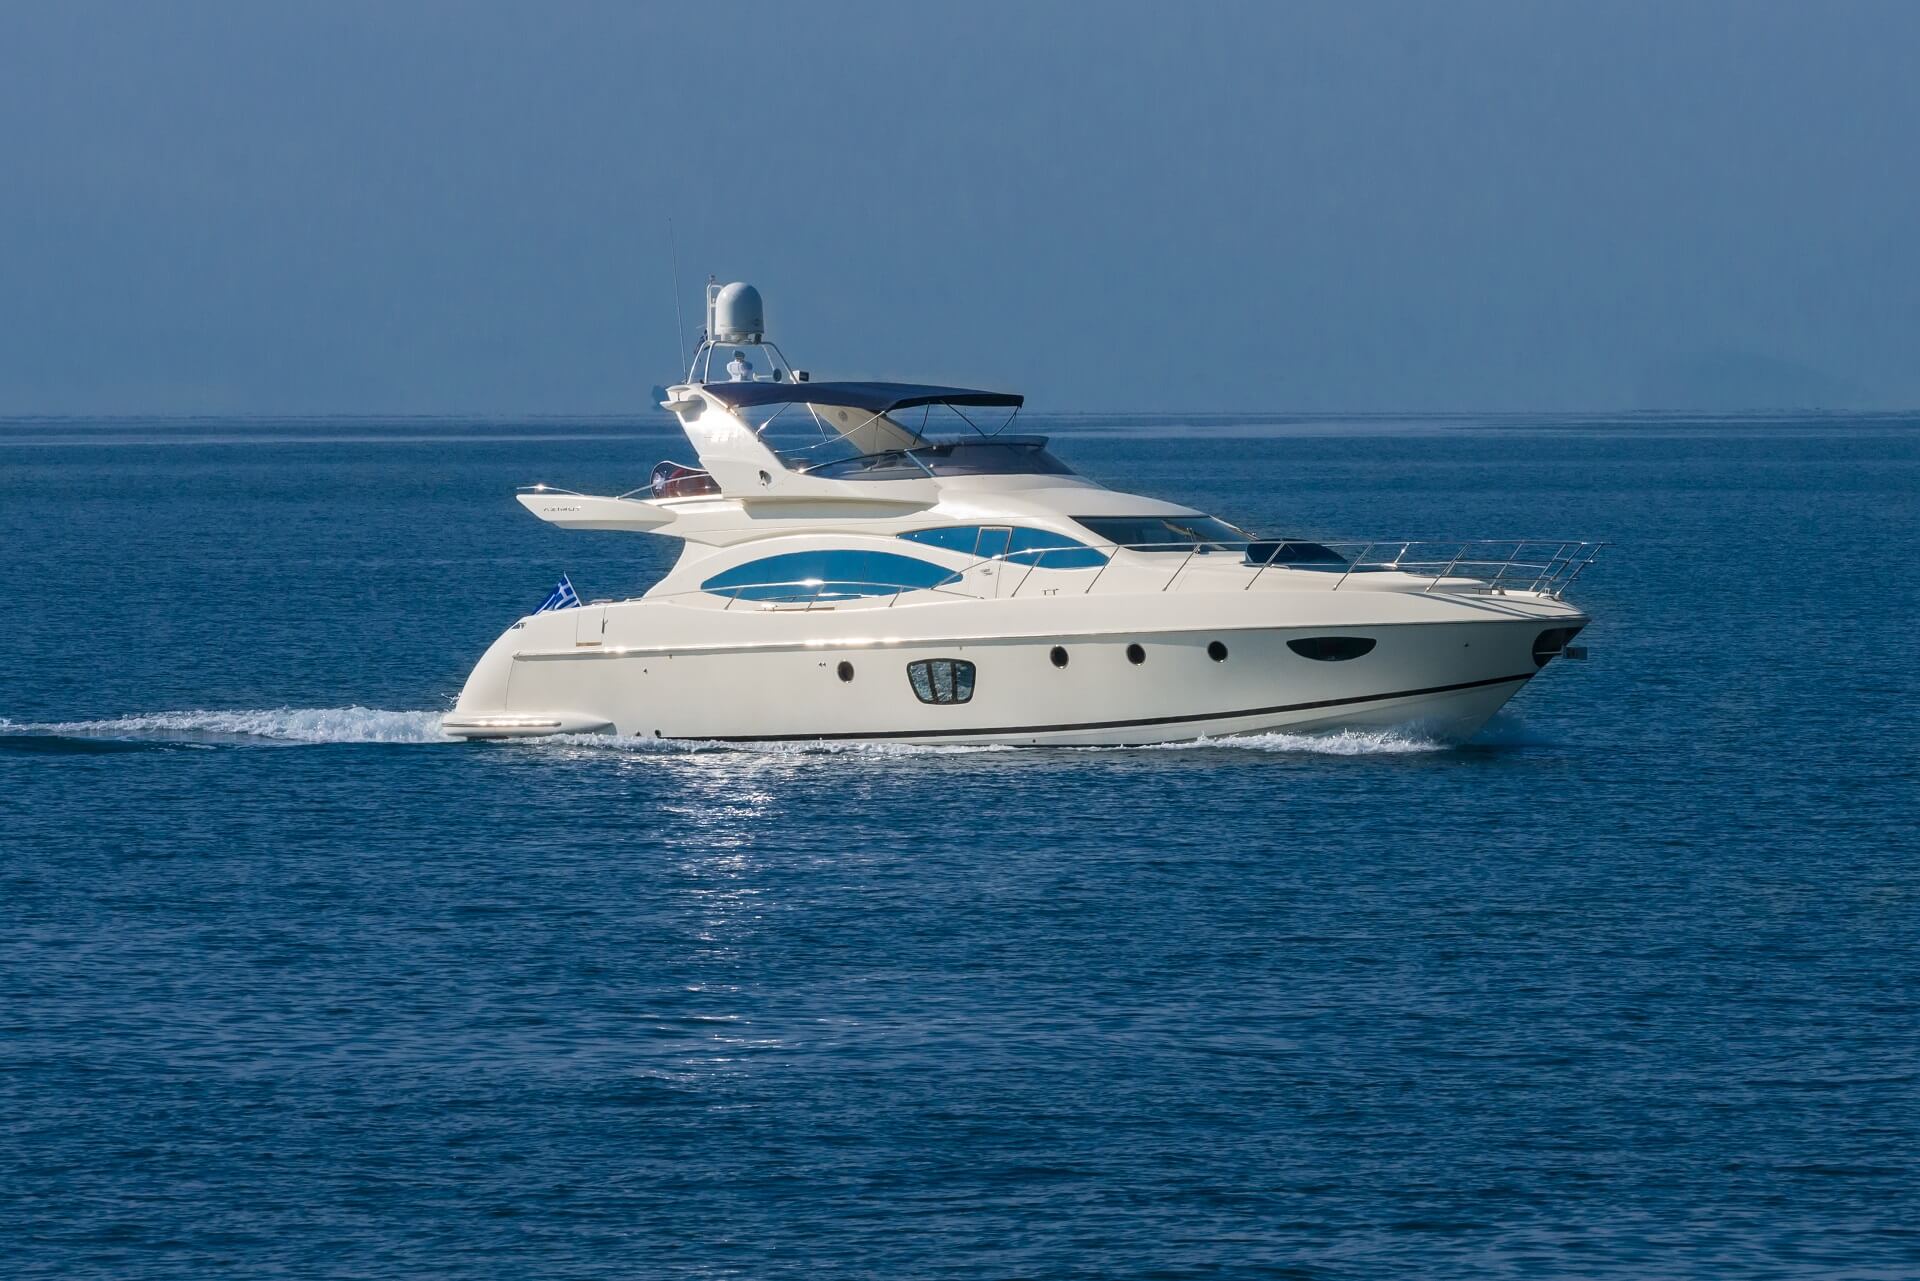 Luxury yacht rentals Greek islands. Yacht hire Greek islands. Yacht charters in Greece with crew. Motor yacht charter.